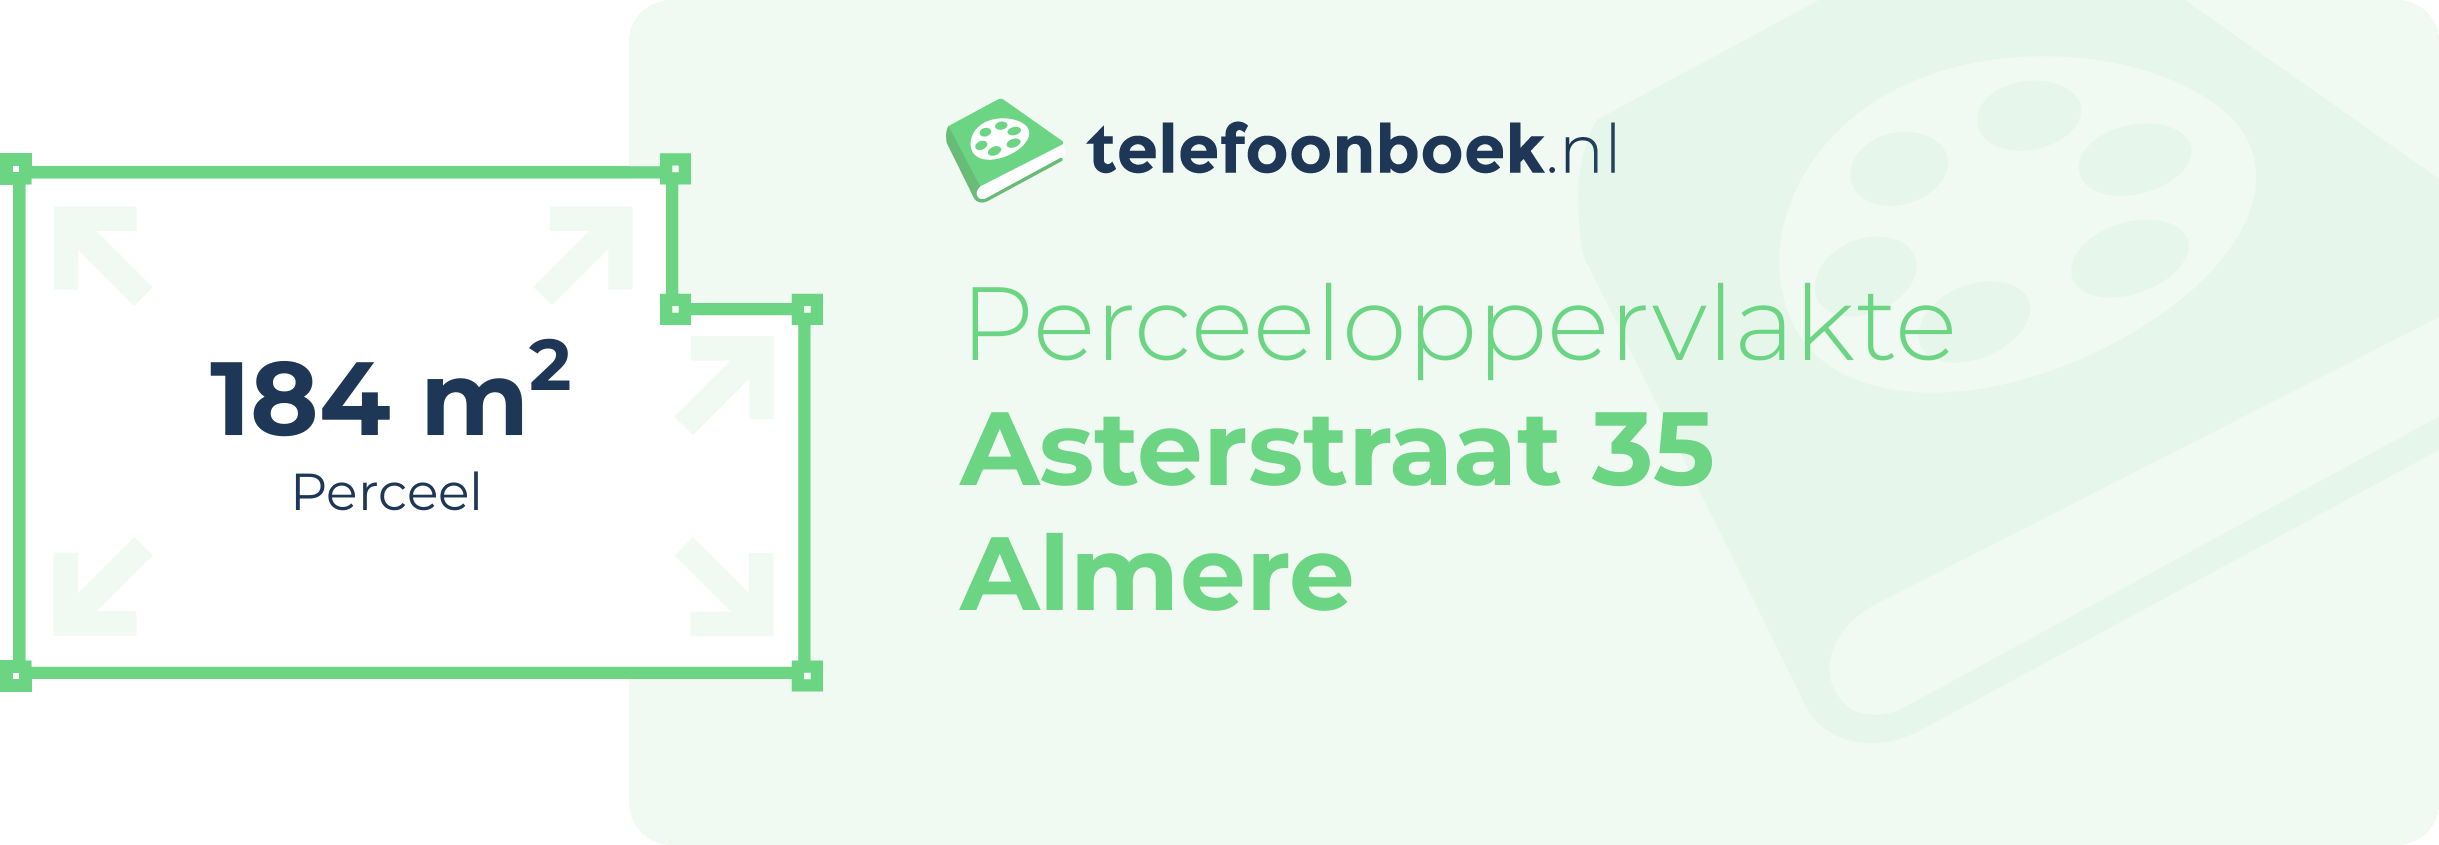 Perceeloppervlakte Asterstraat 35 Almere